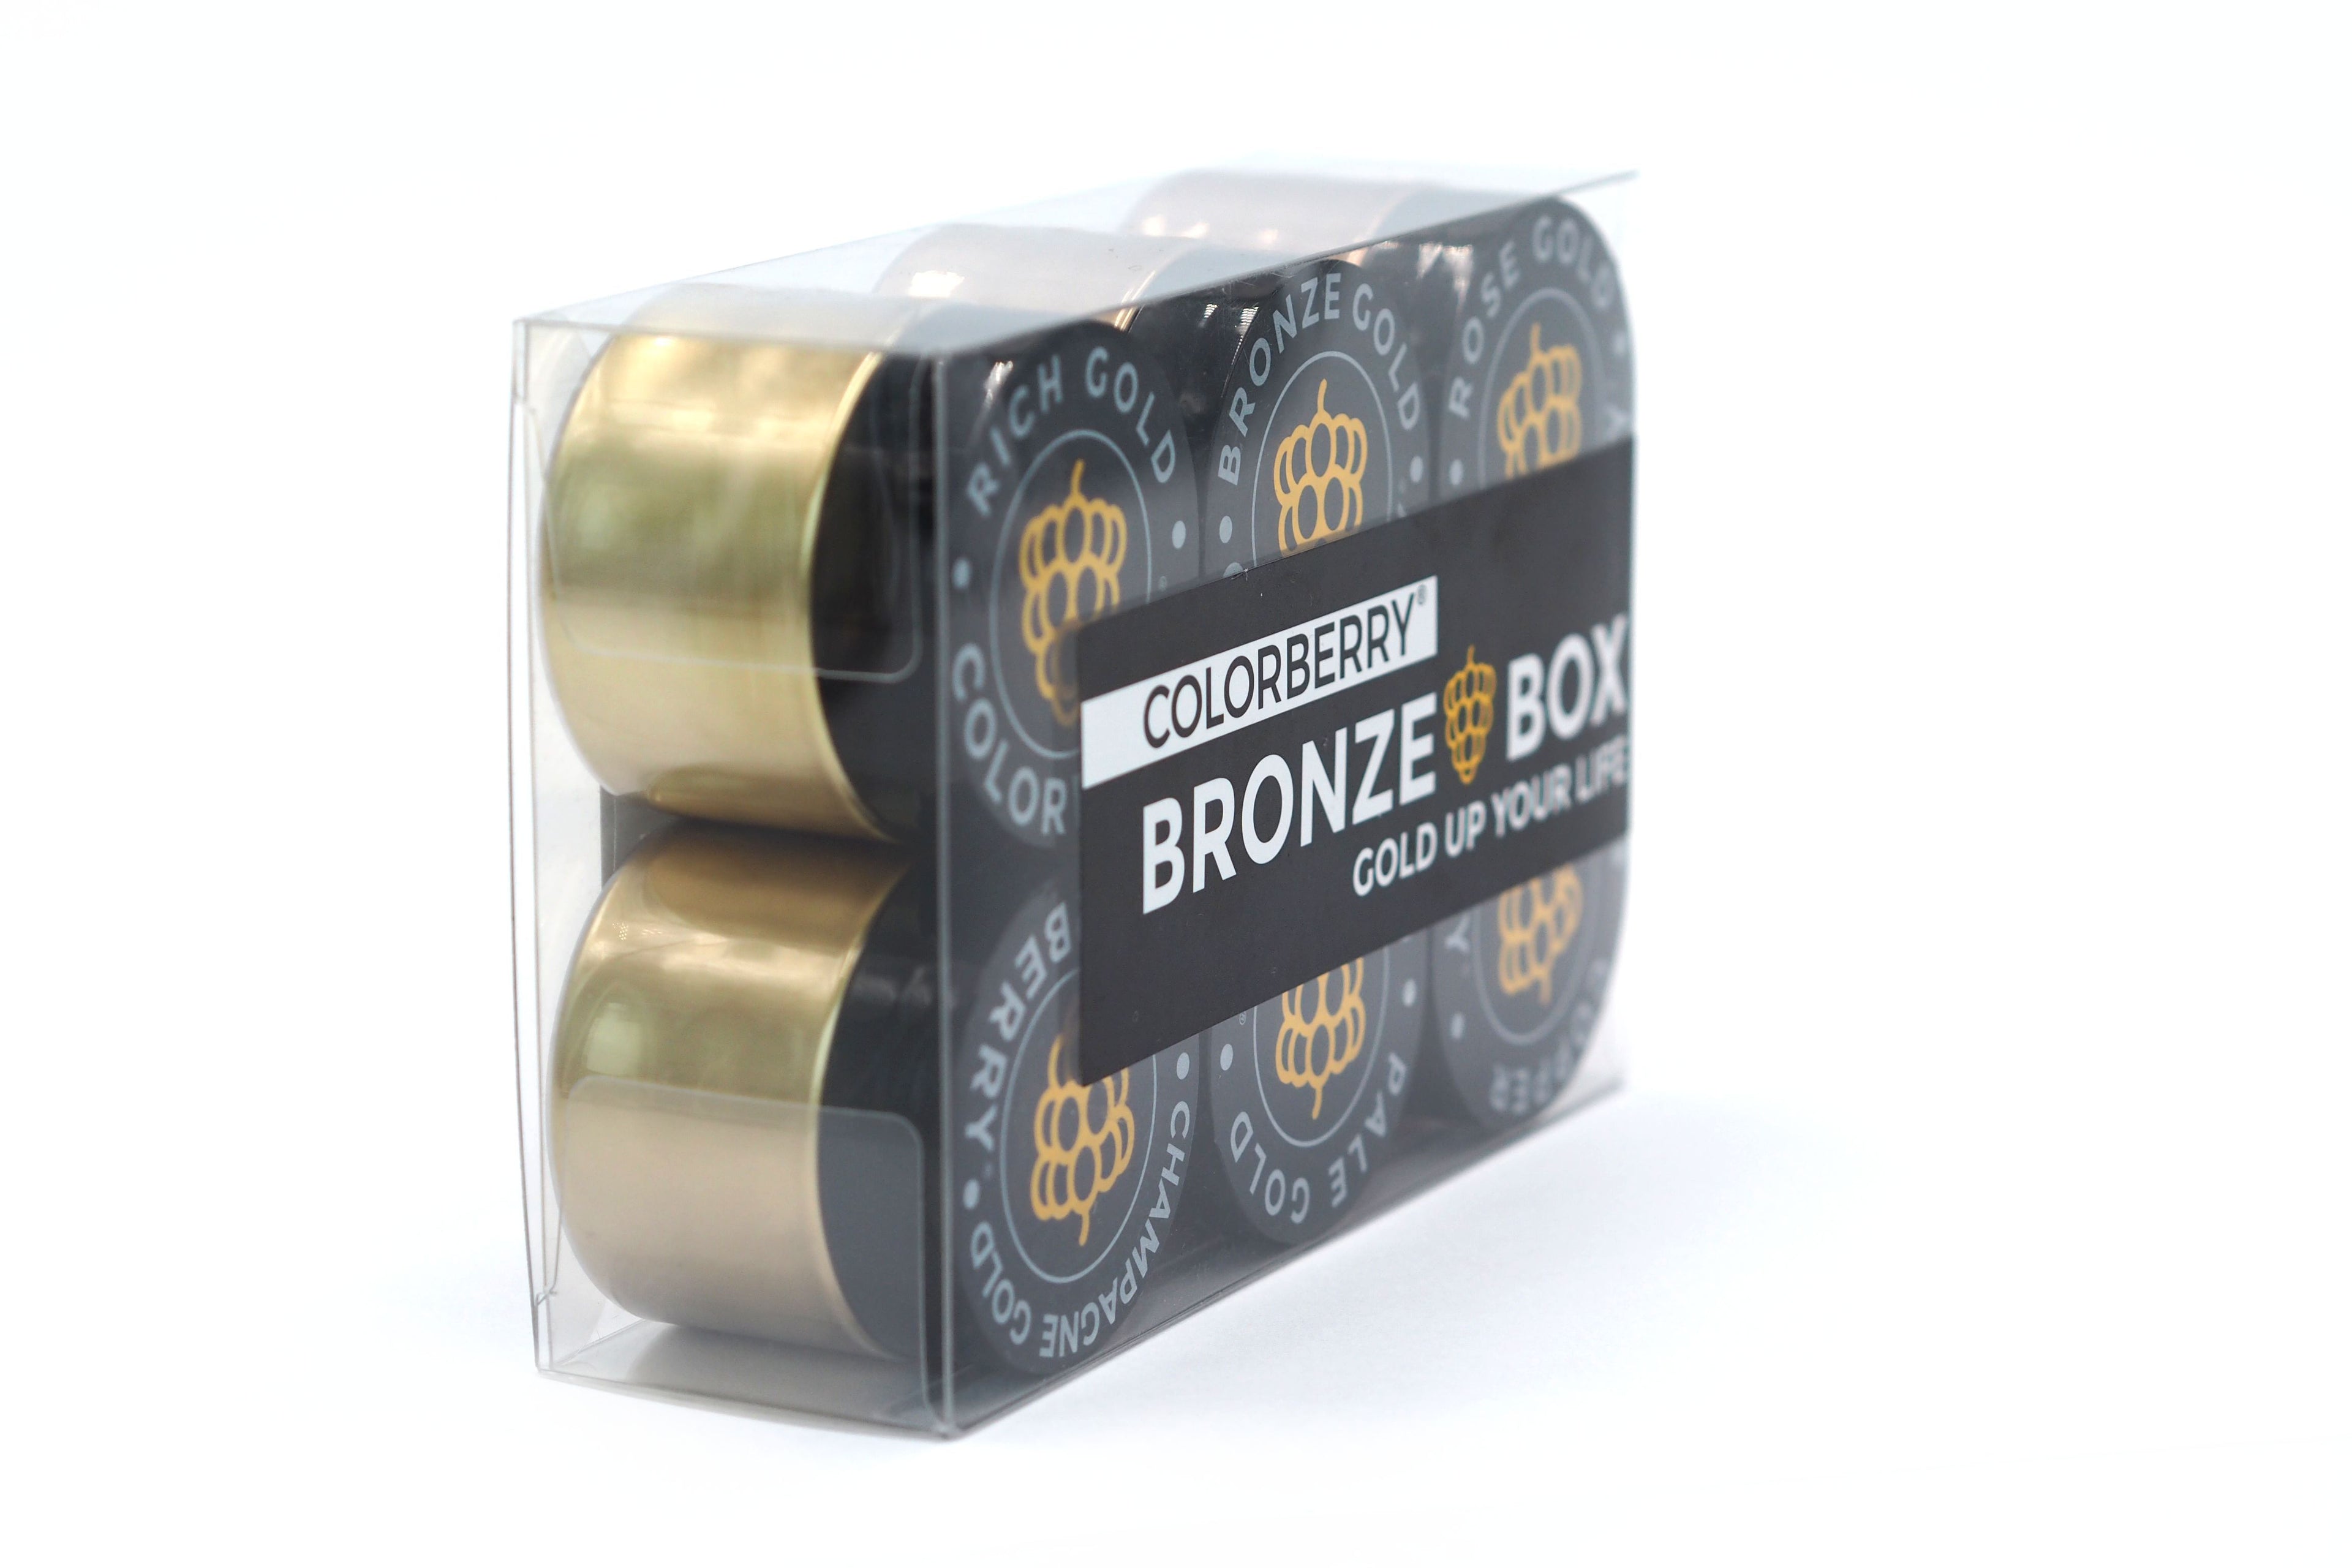 BRONZE BOX -  6 x 25gr metallic floating powder